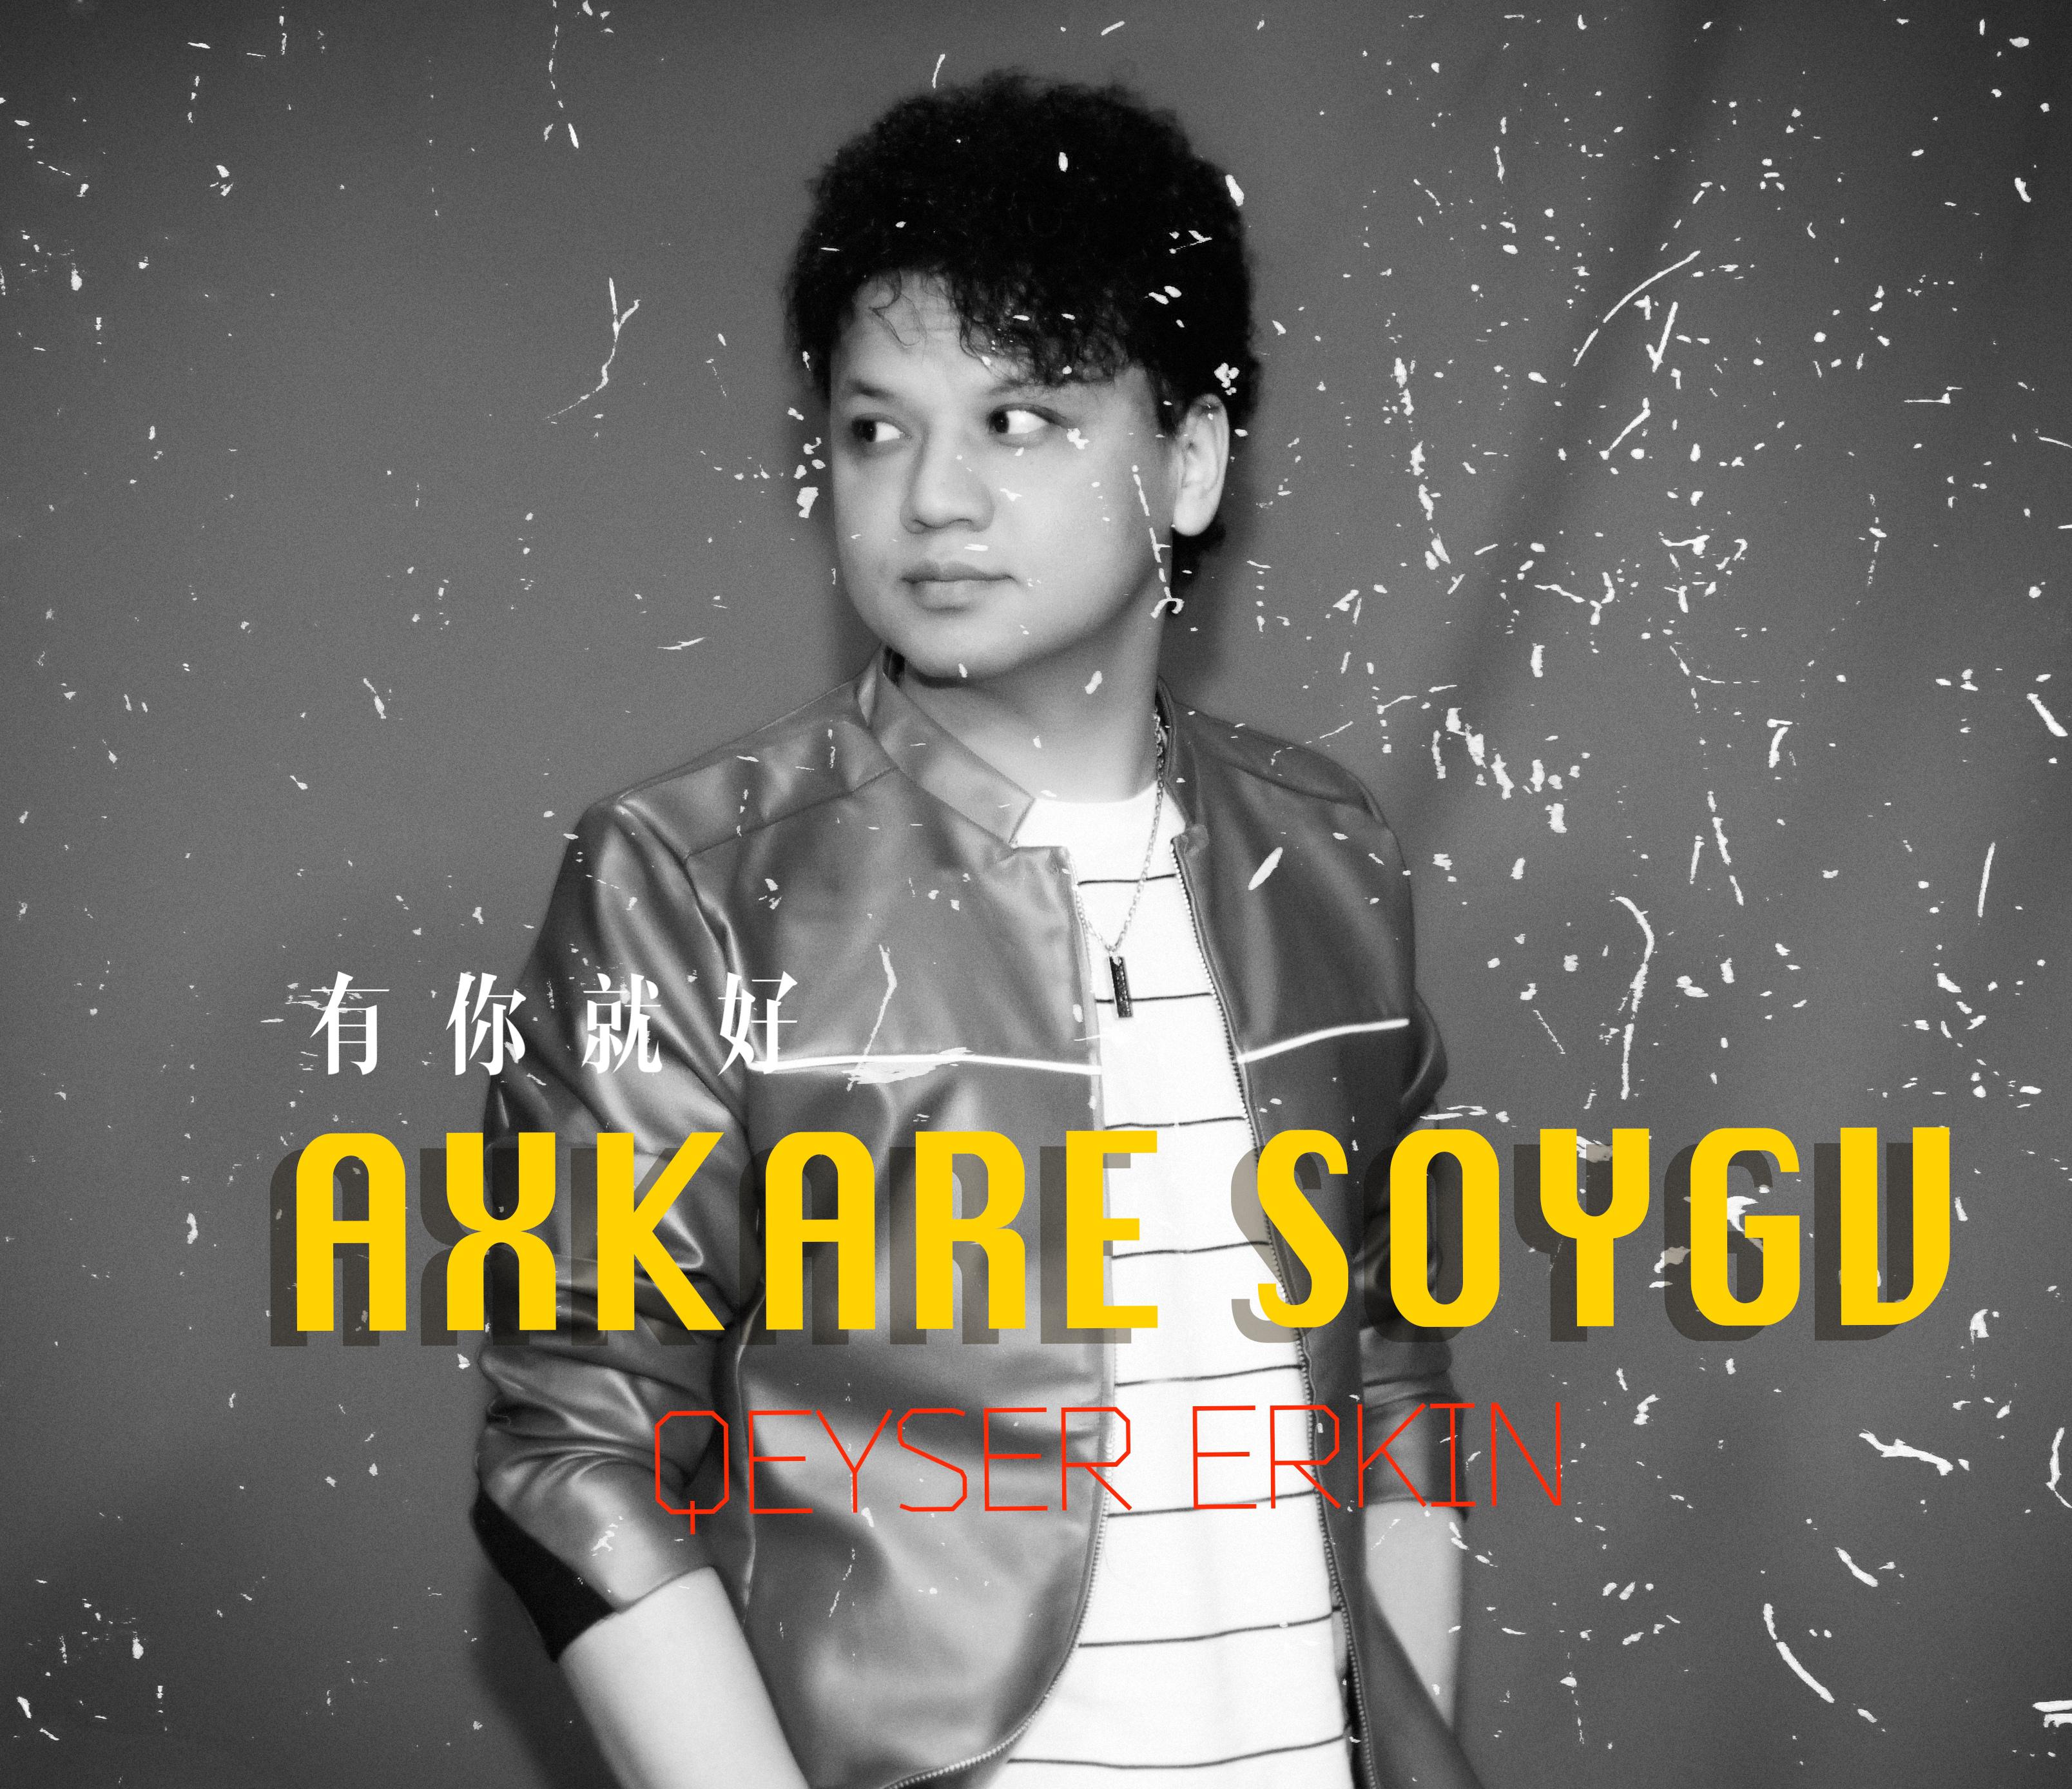 Ashkara soygu&有你就好